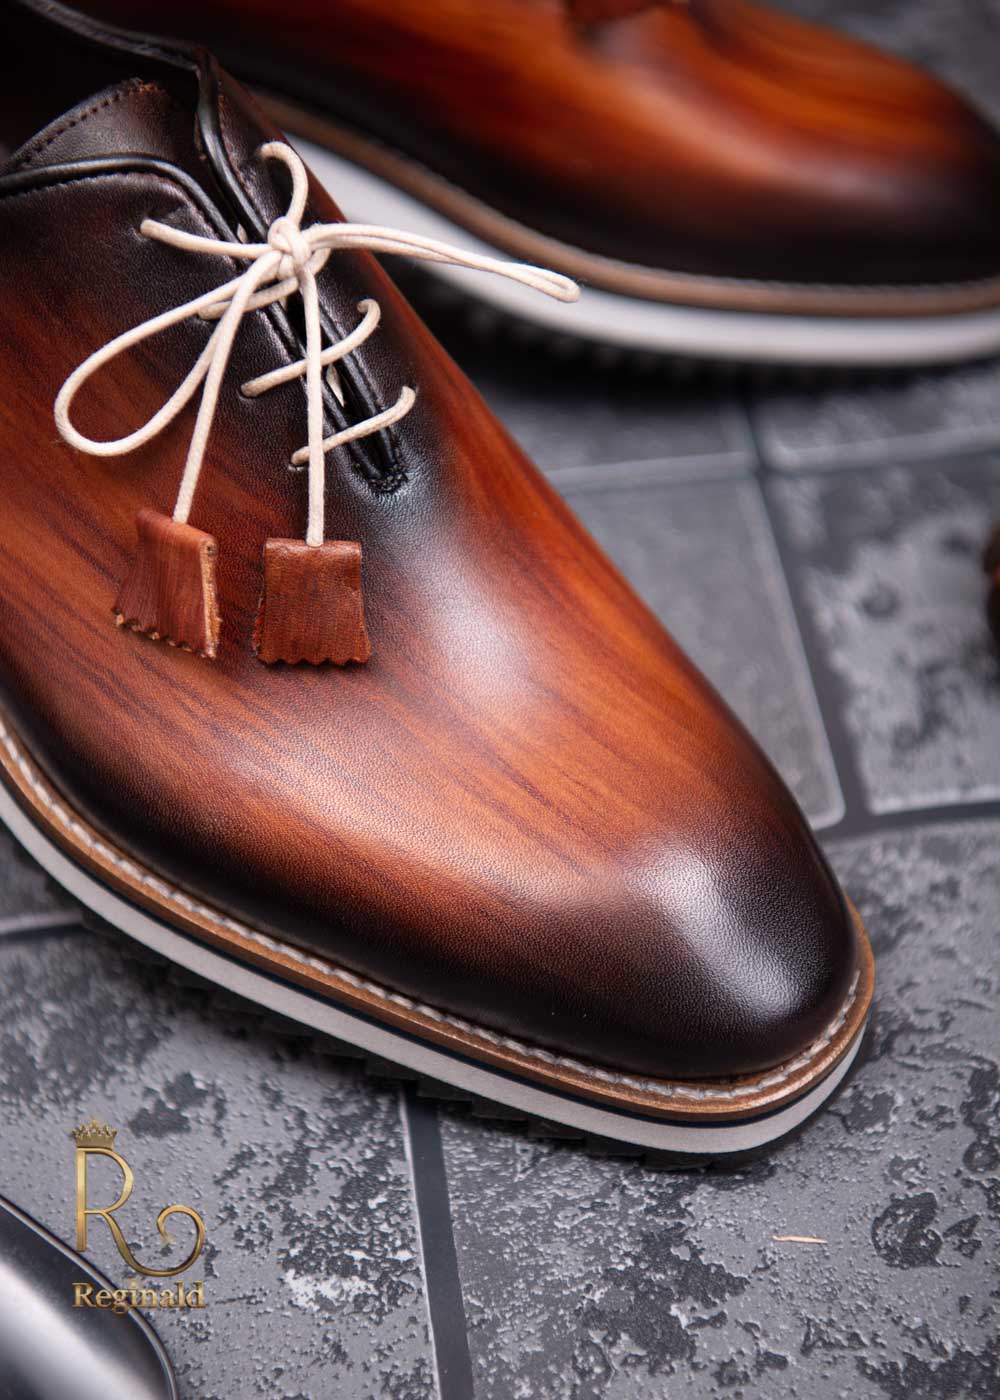 Pantofi Casual de barbati din piele naturala, maro cu talpa inalta – P1327 – Reginald.ro – mare magazin de Costume barbatesti